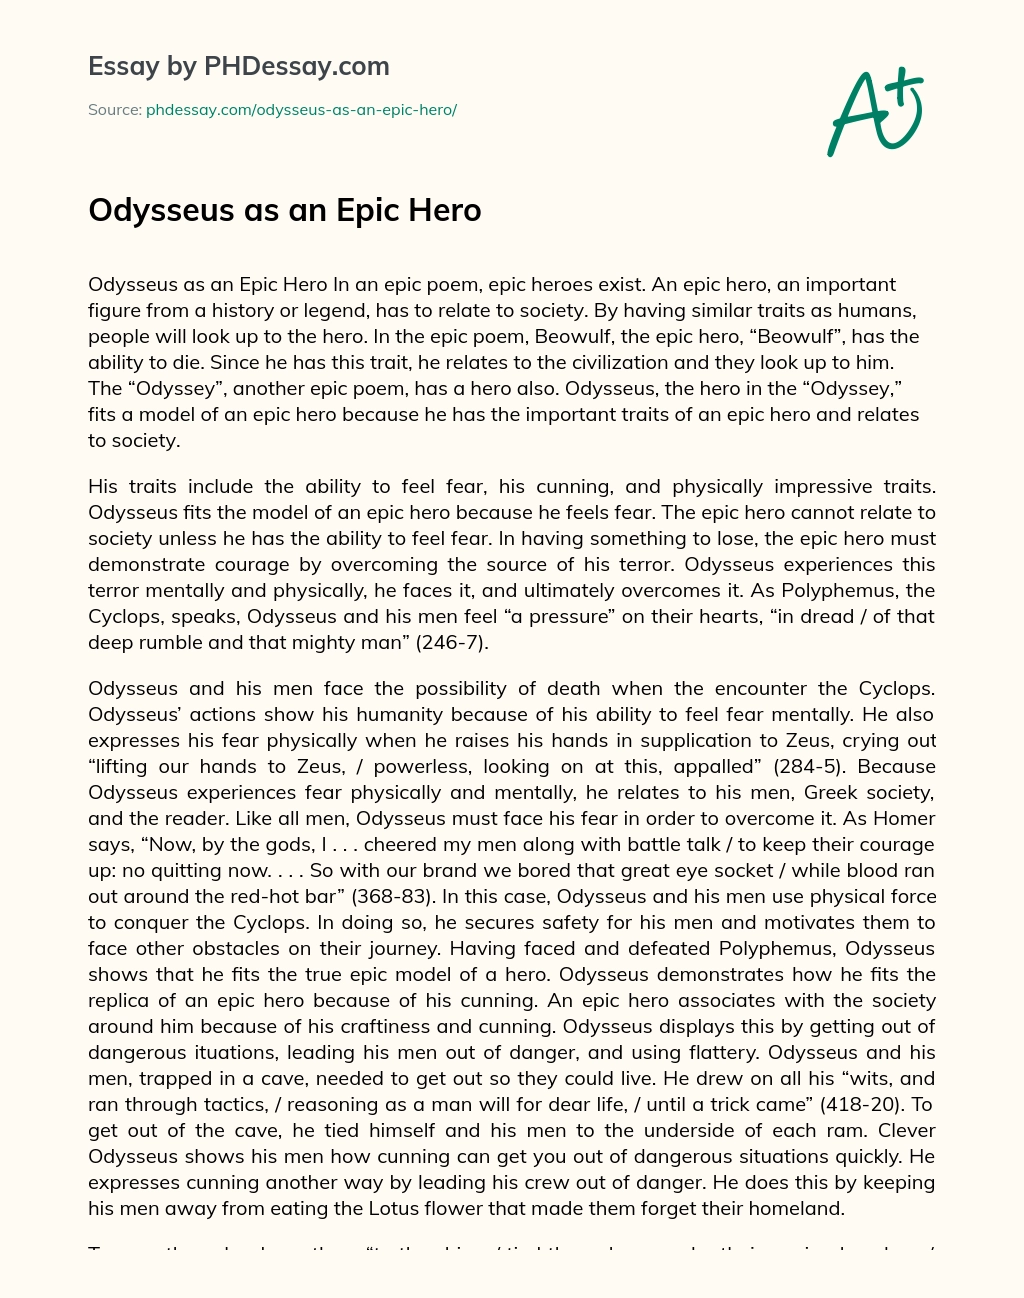 Odysseus as an Epic Hero essay